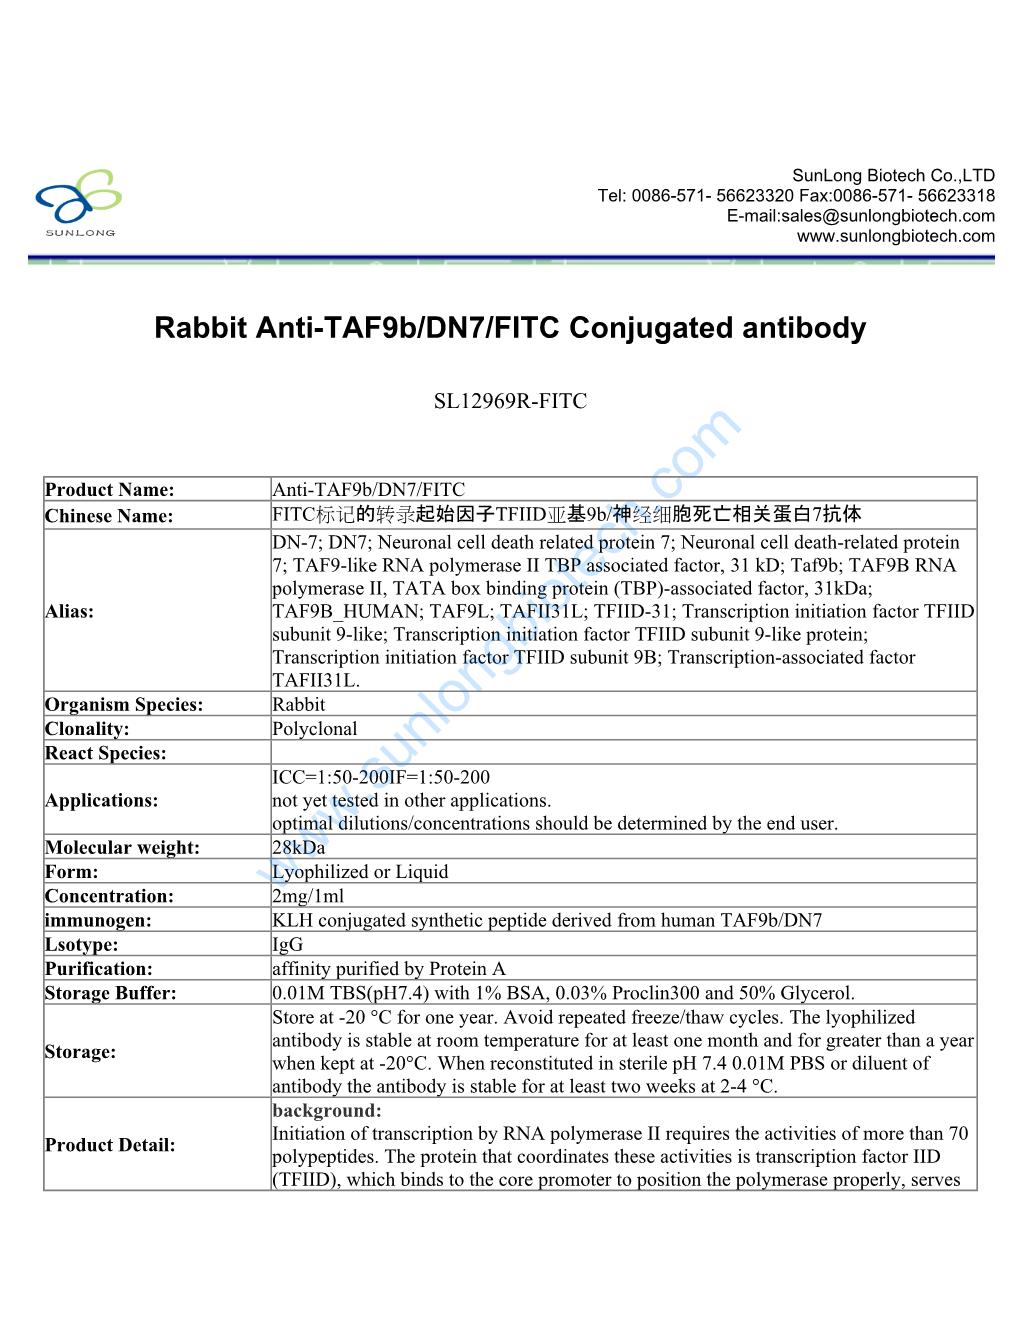 Rabbit Anti-Taf9b/DN7/FITC Conjugated Antibody-SL12969R